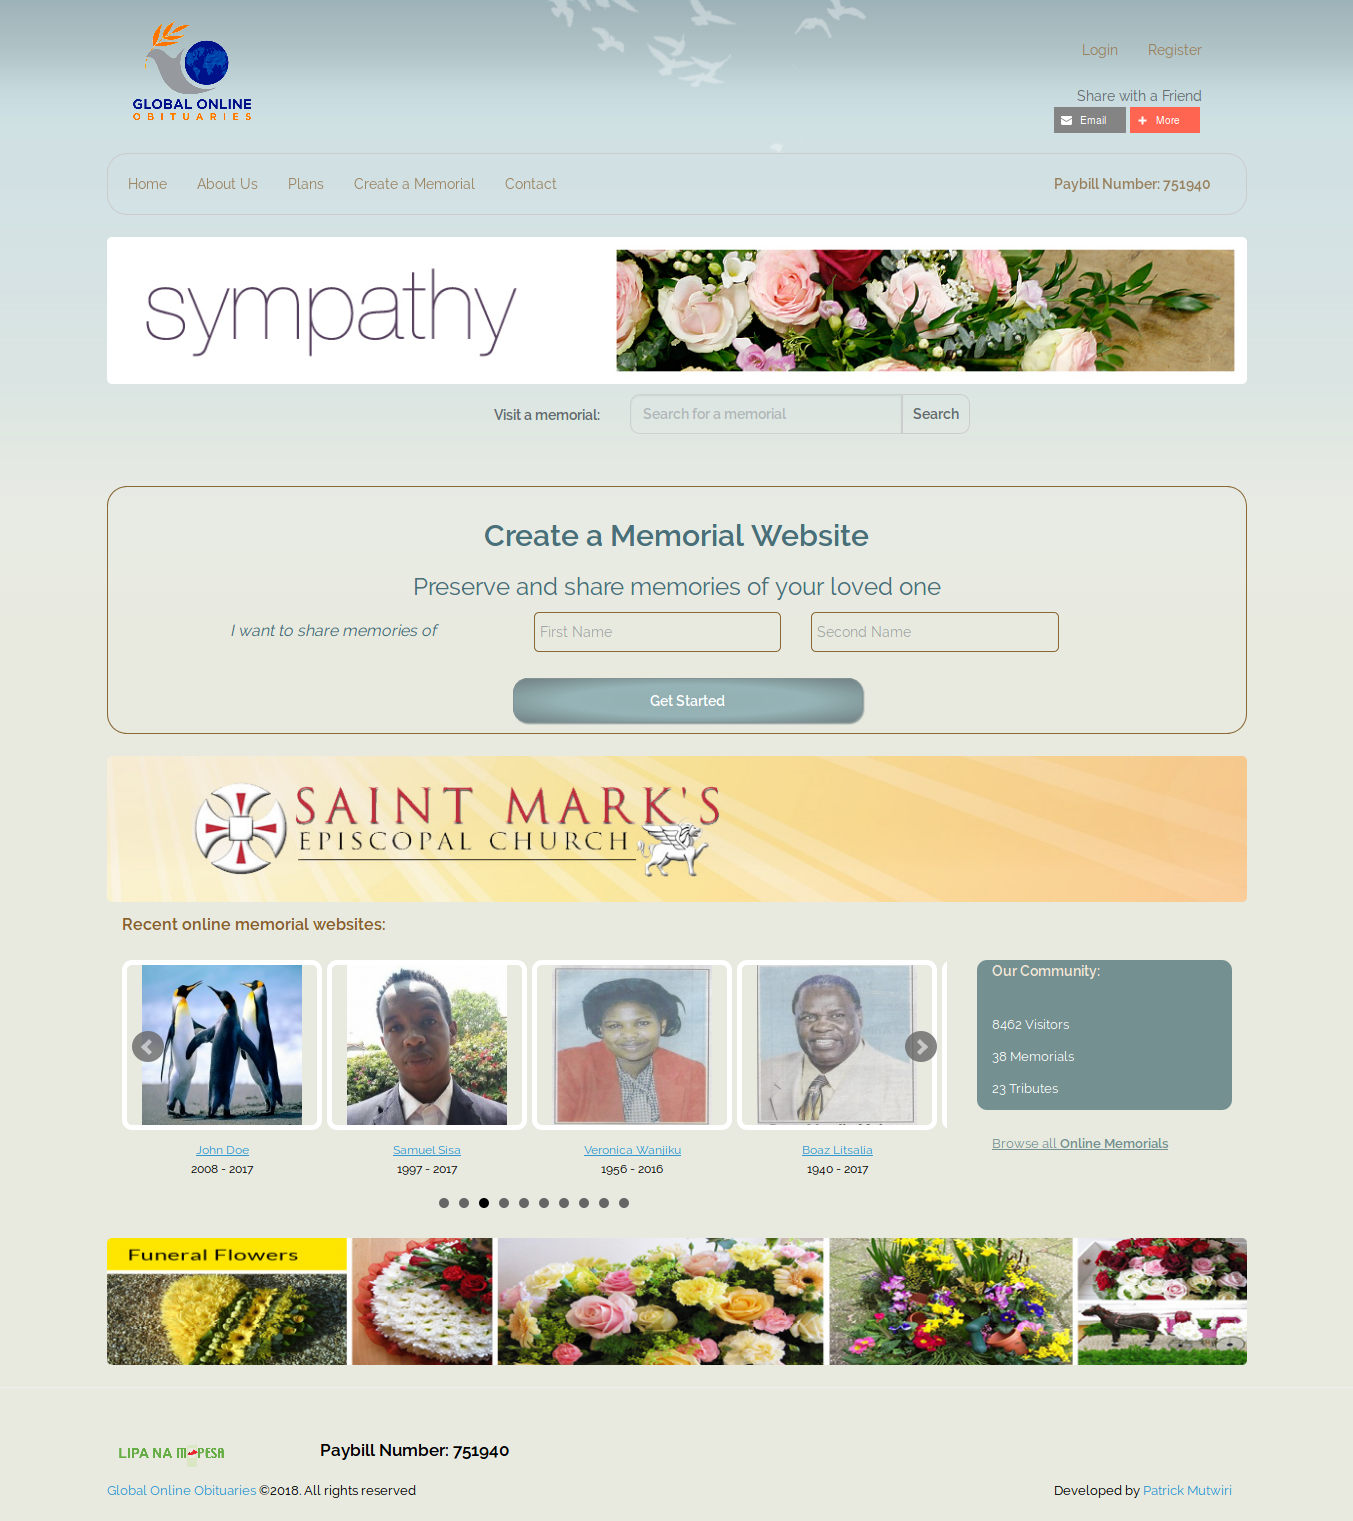 Global Online Obituaries